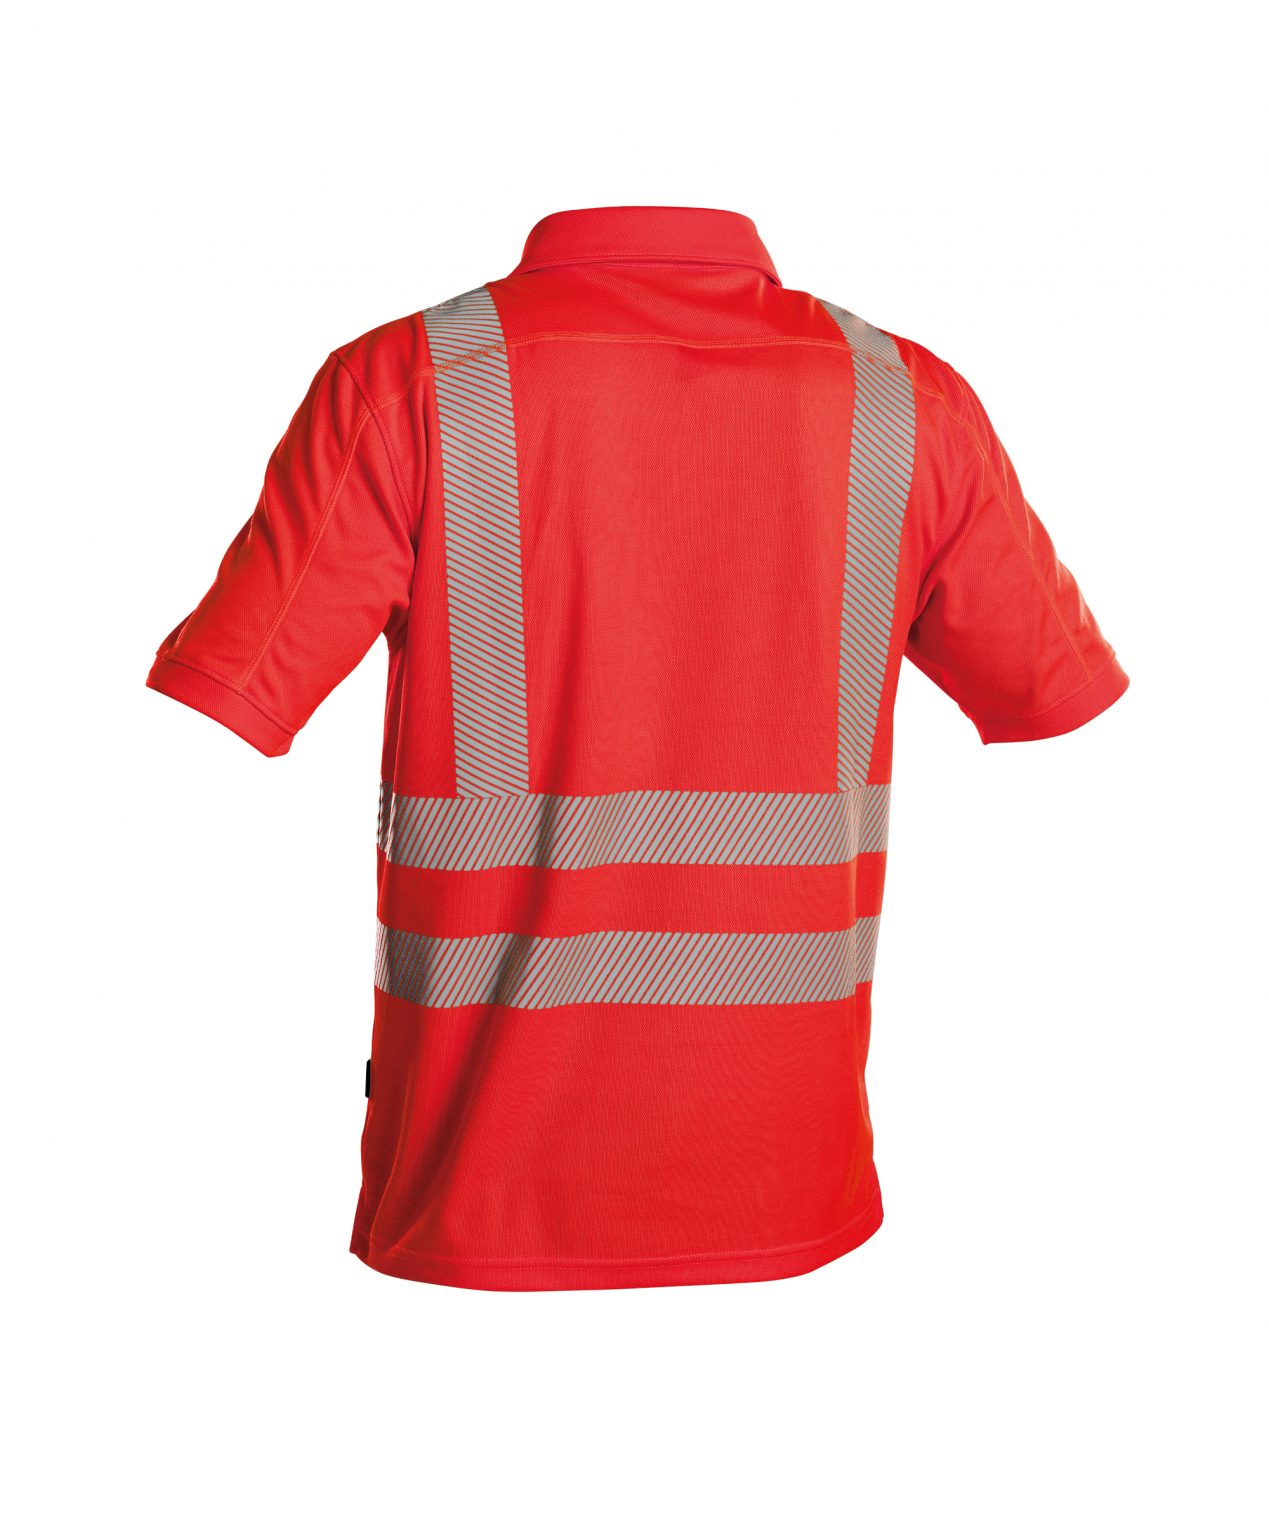 brandon high visibility uv polo shirt fluo red back